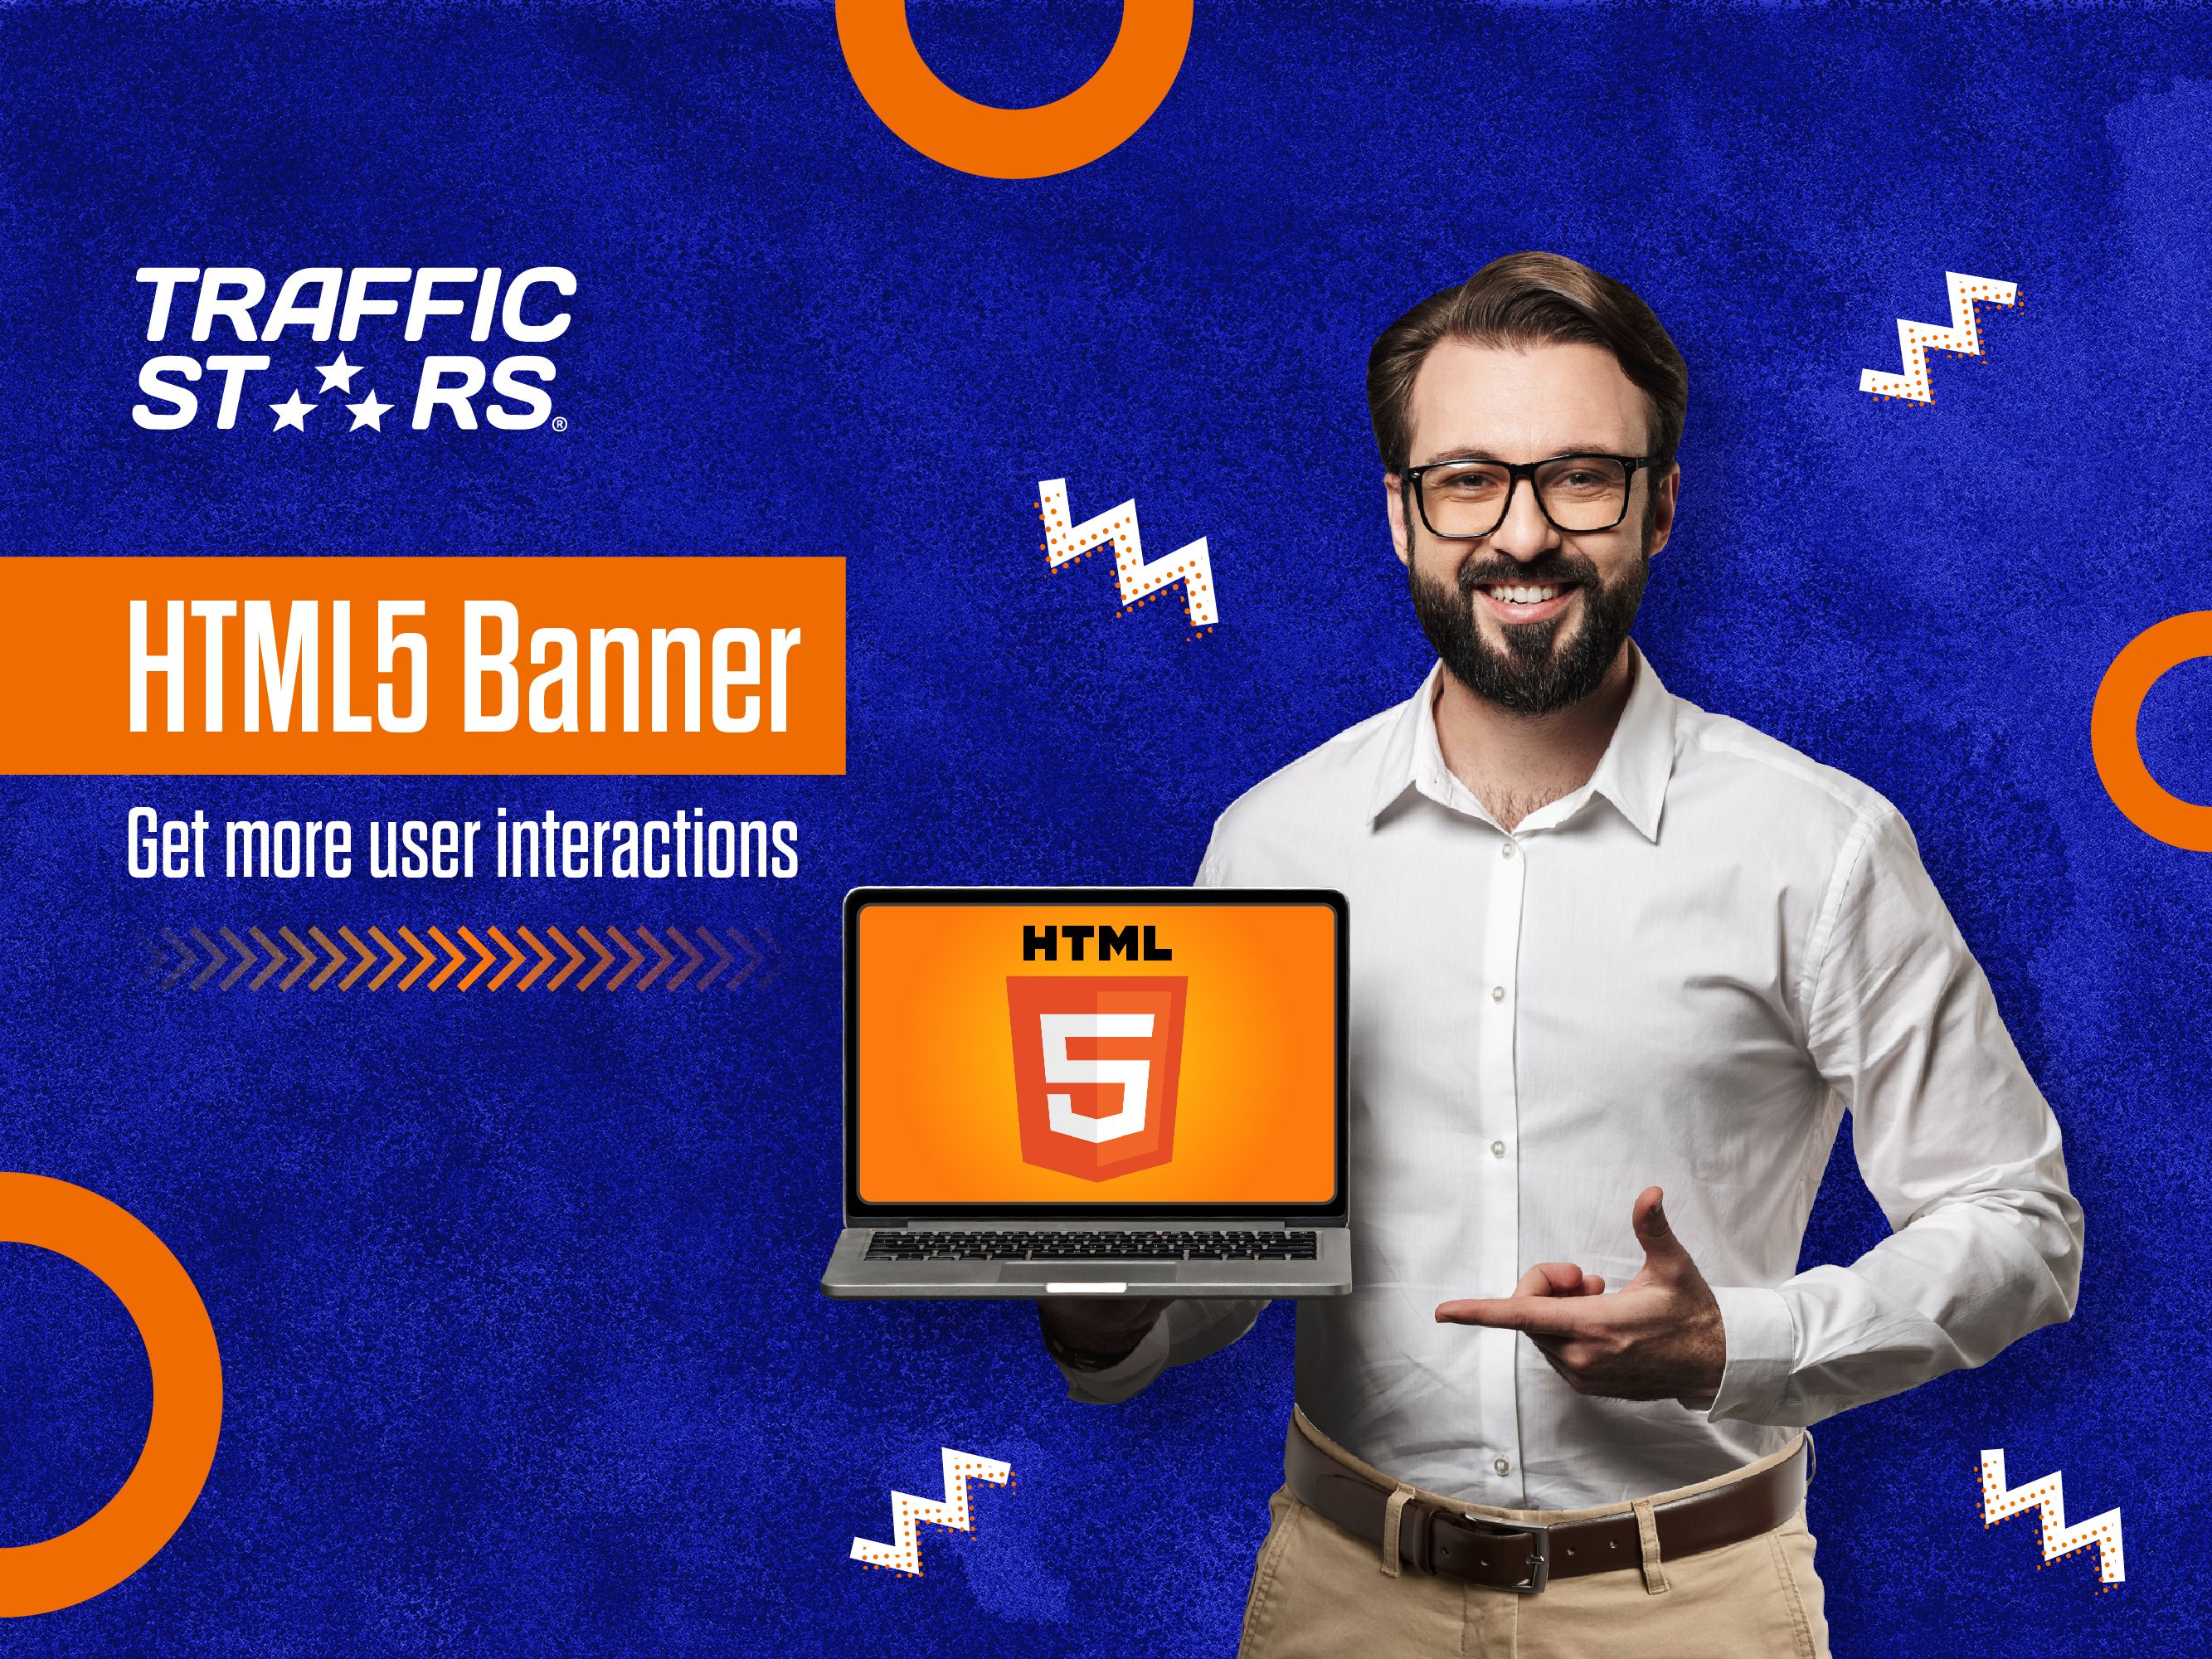 Benefits of HTML5 banner